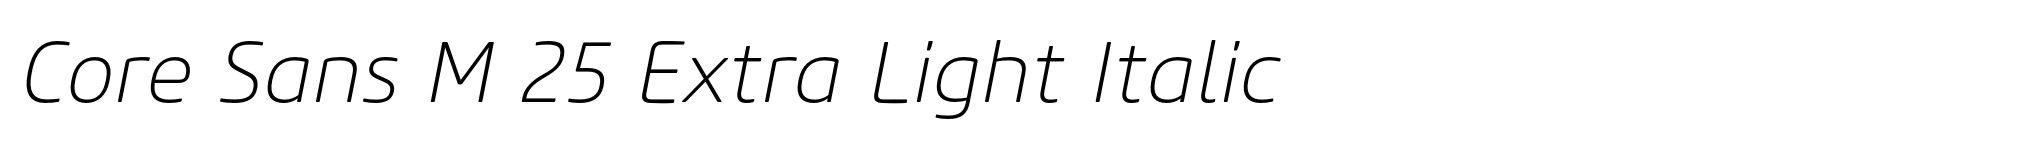 Core Sans M 25 Extra Light Italic image